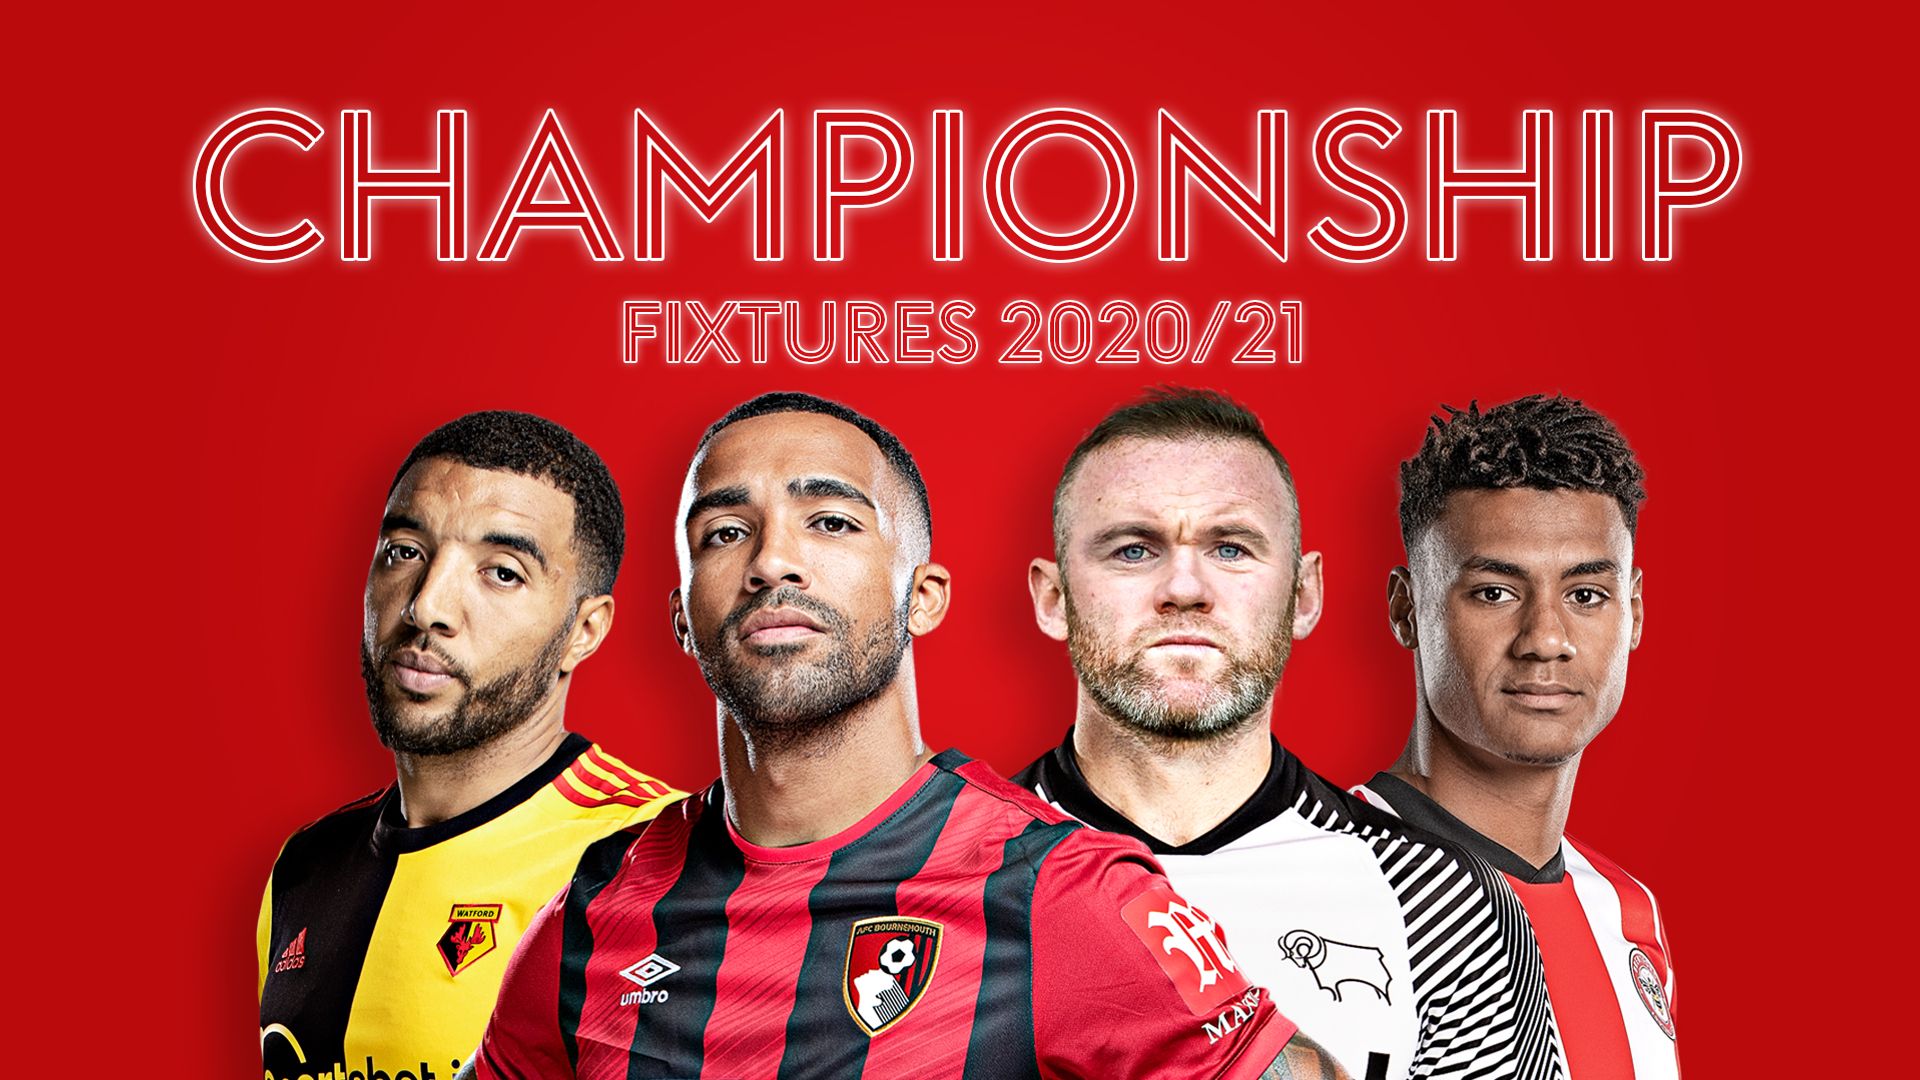 Championship fixtures 2020/21